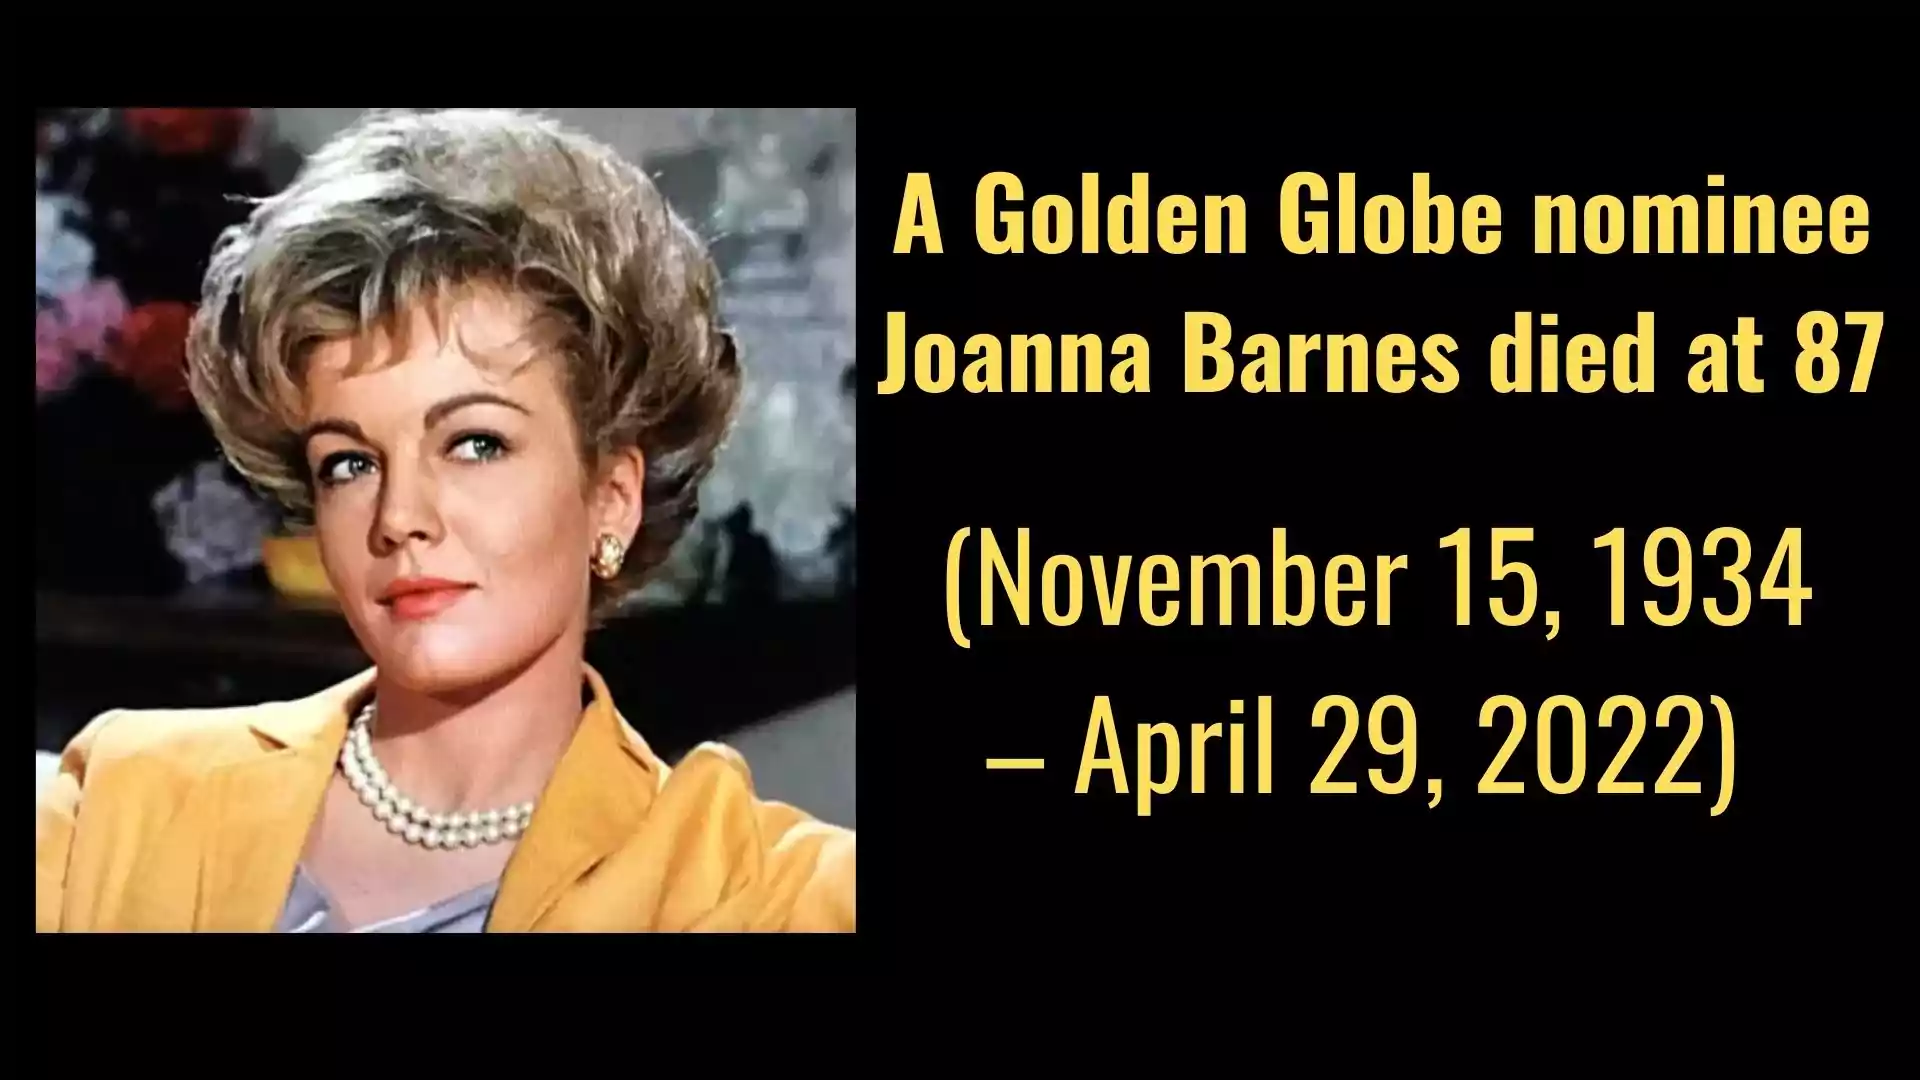 A Golden Globe nominee Joanna Barnes died at 87